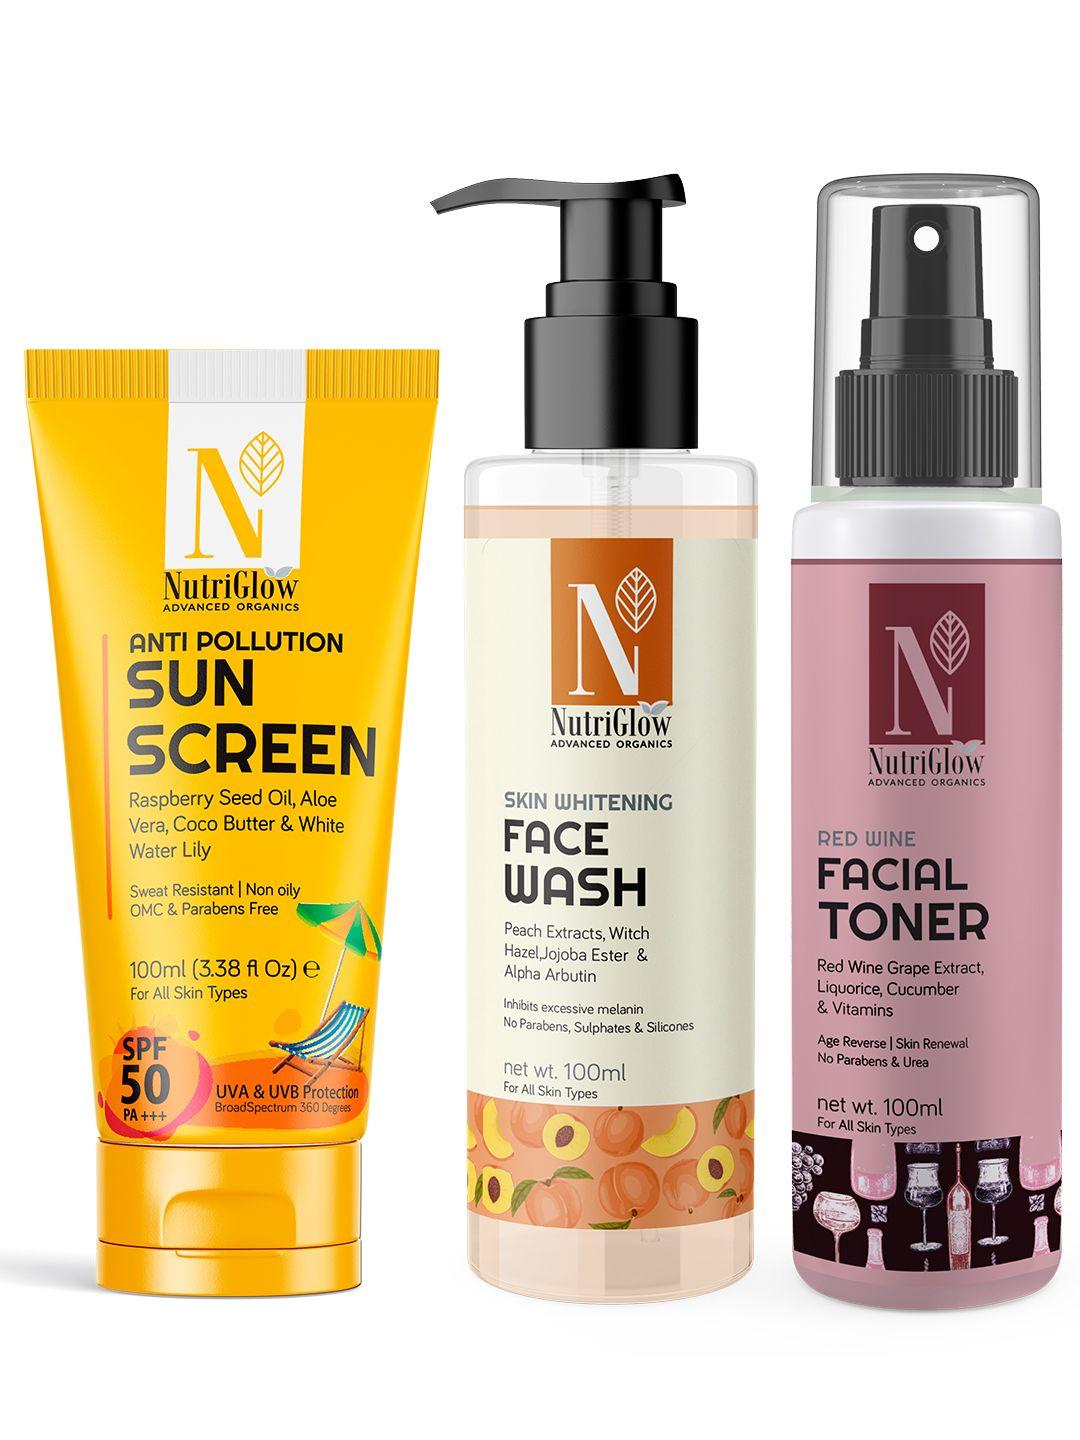 nutriglow advanced organics skin whitening face wash,red wine toner & sunscreen-100ml each